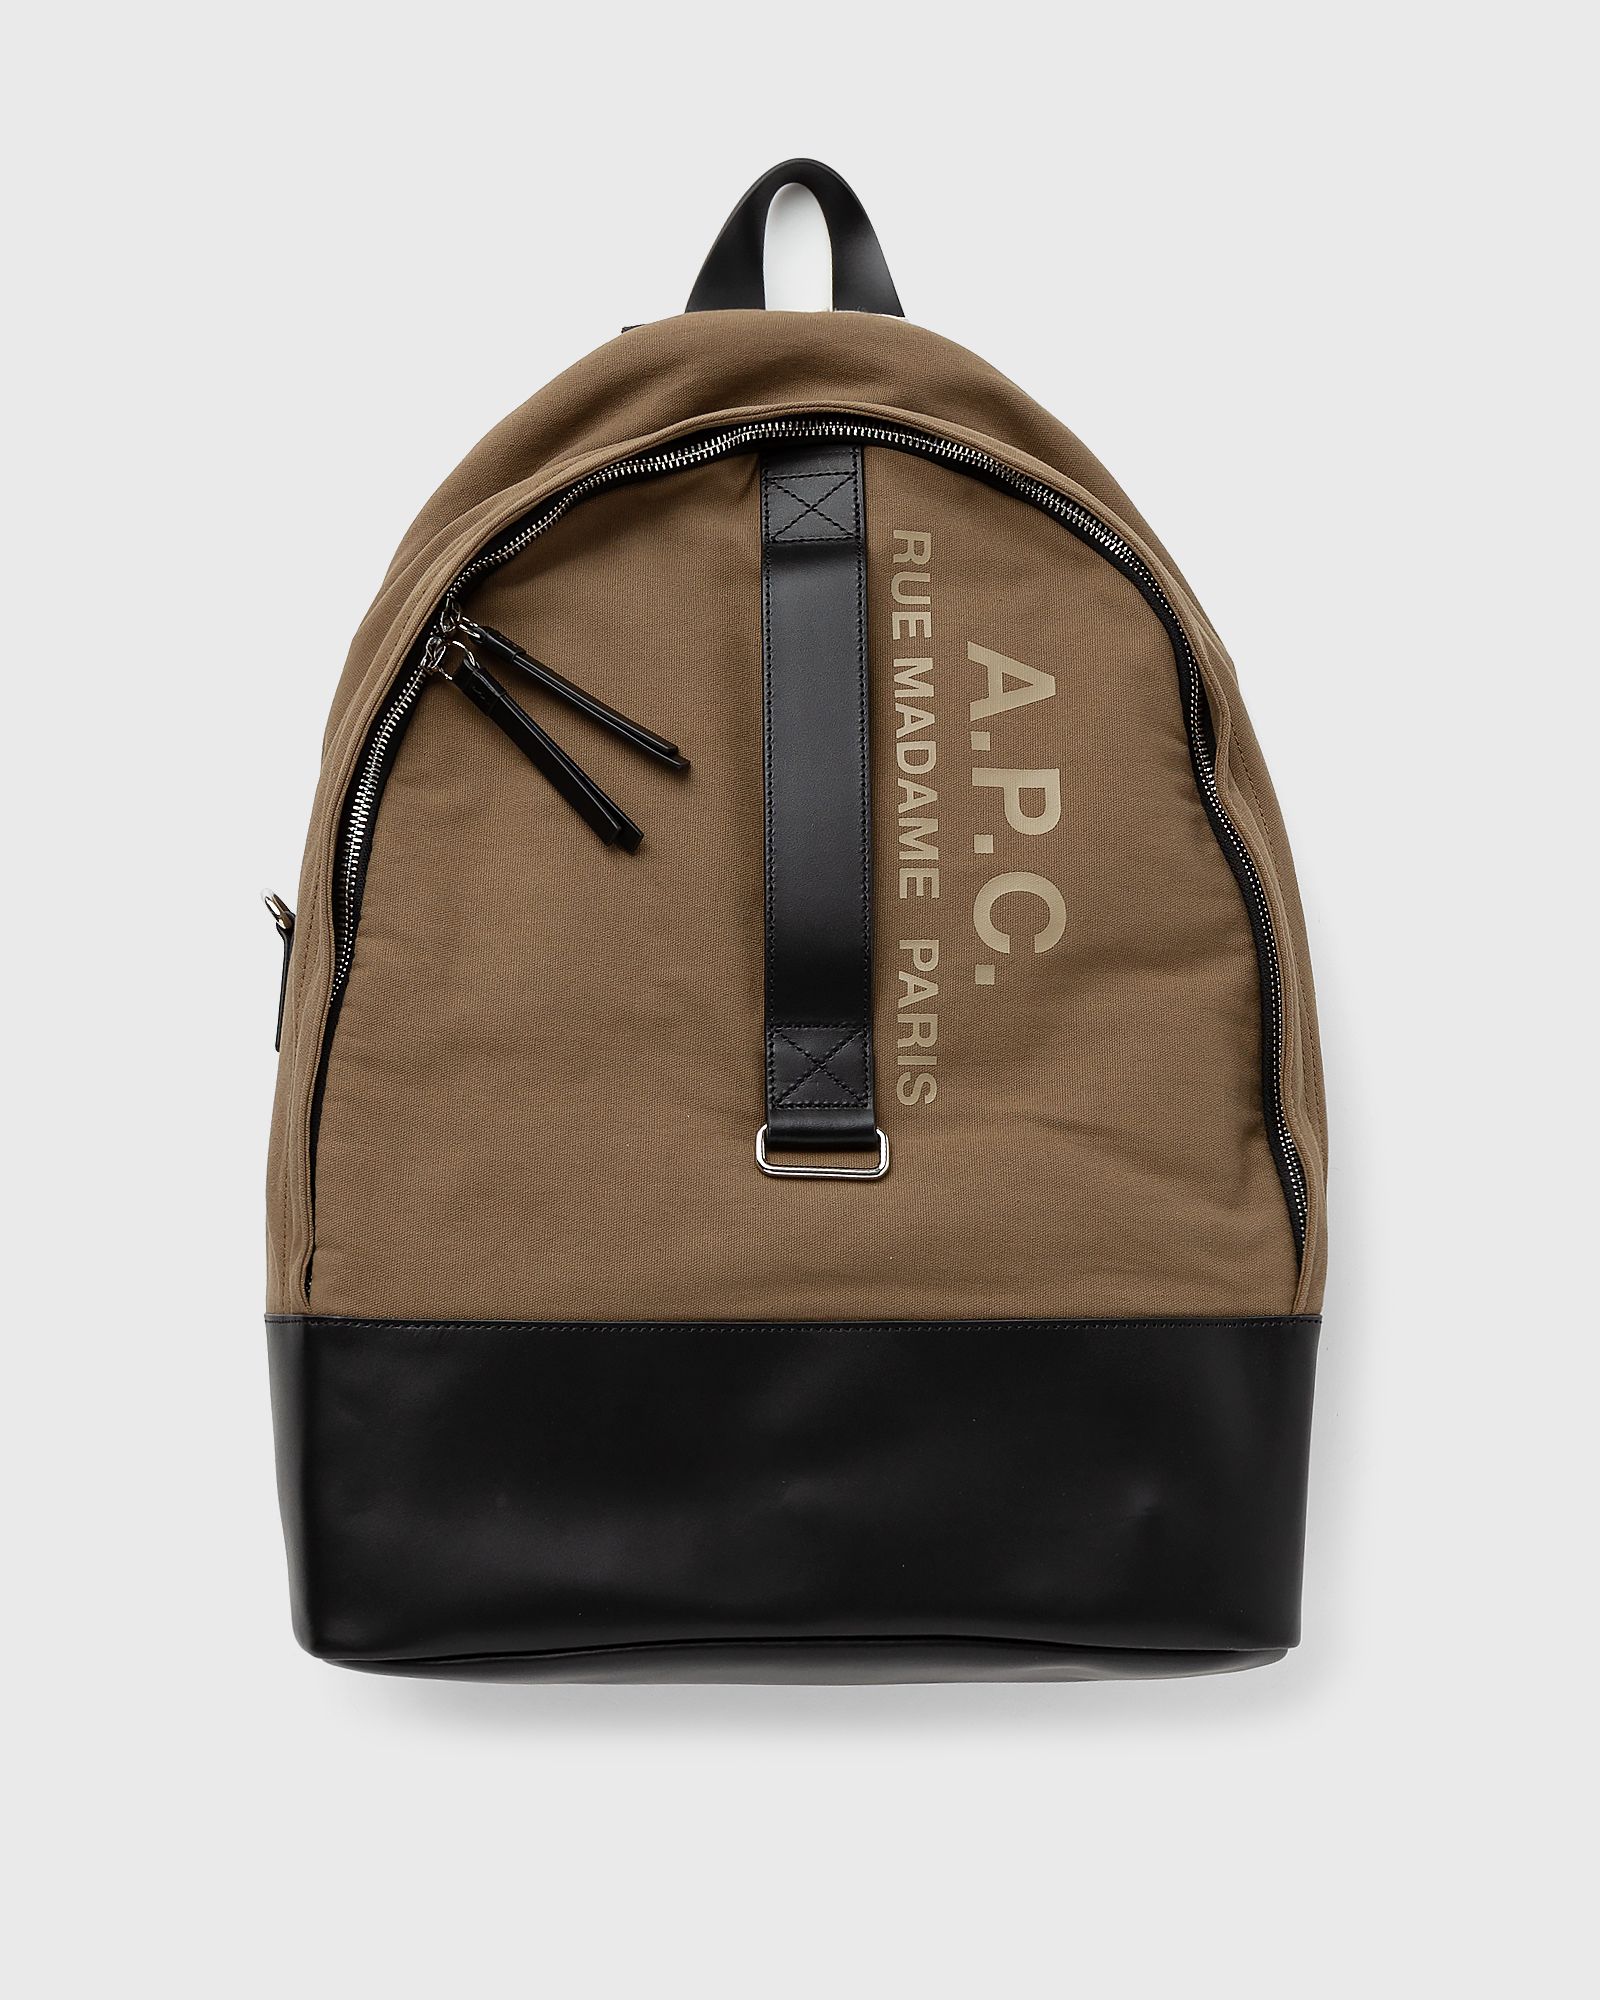 A.P.C. - sac a dos sense men backpacks brown in größe:one size